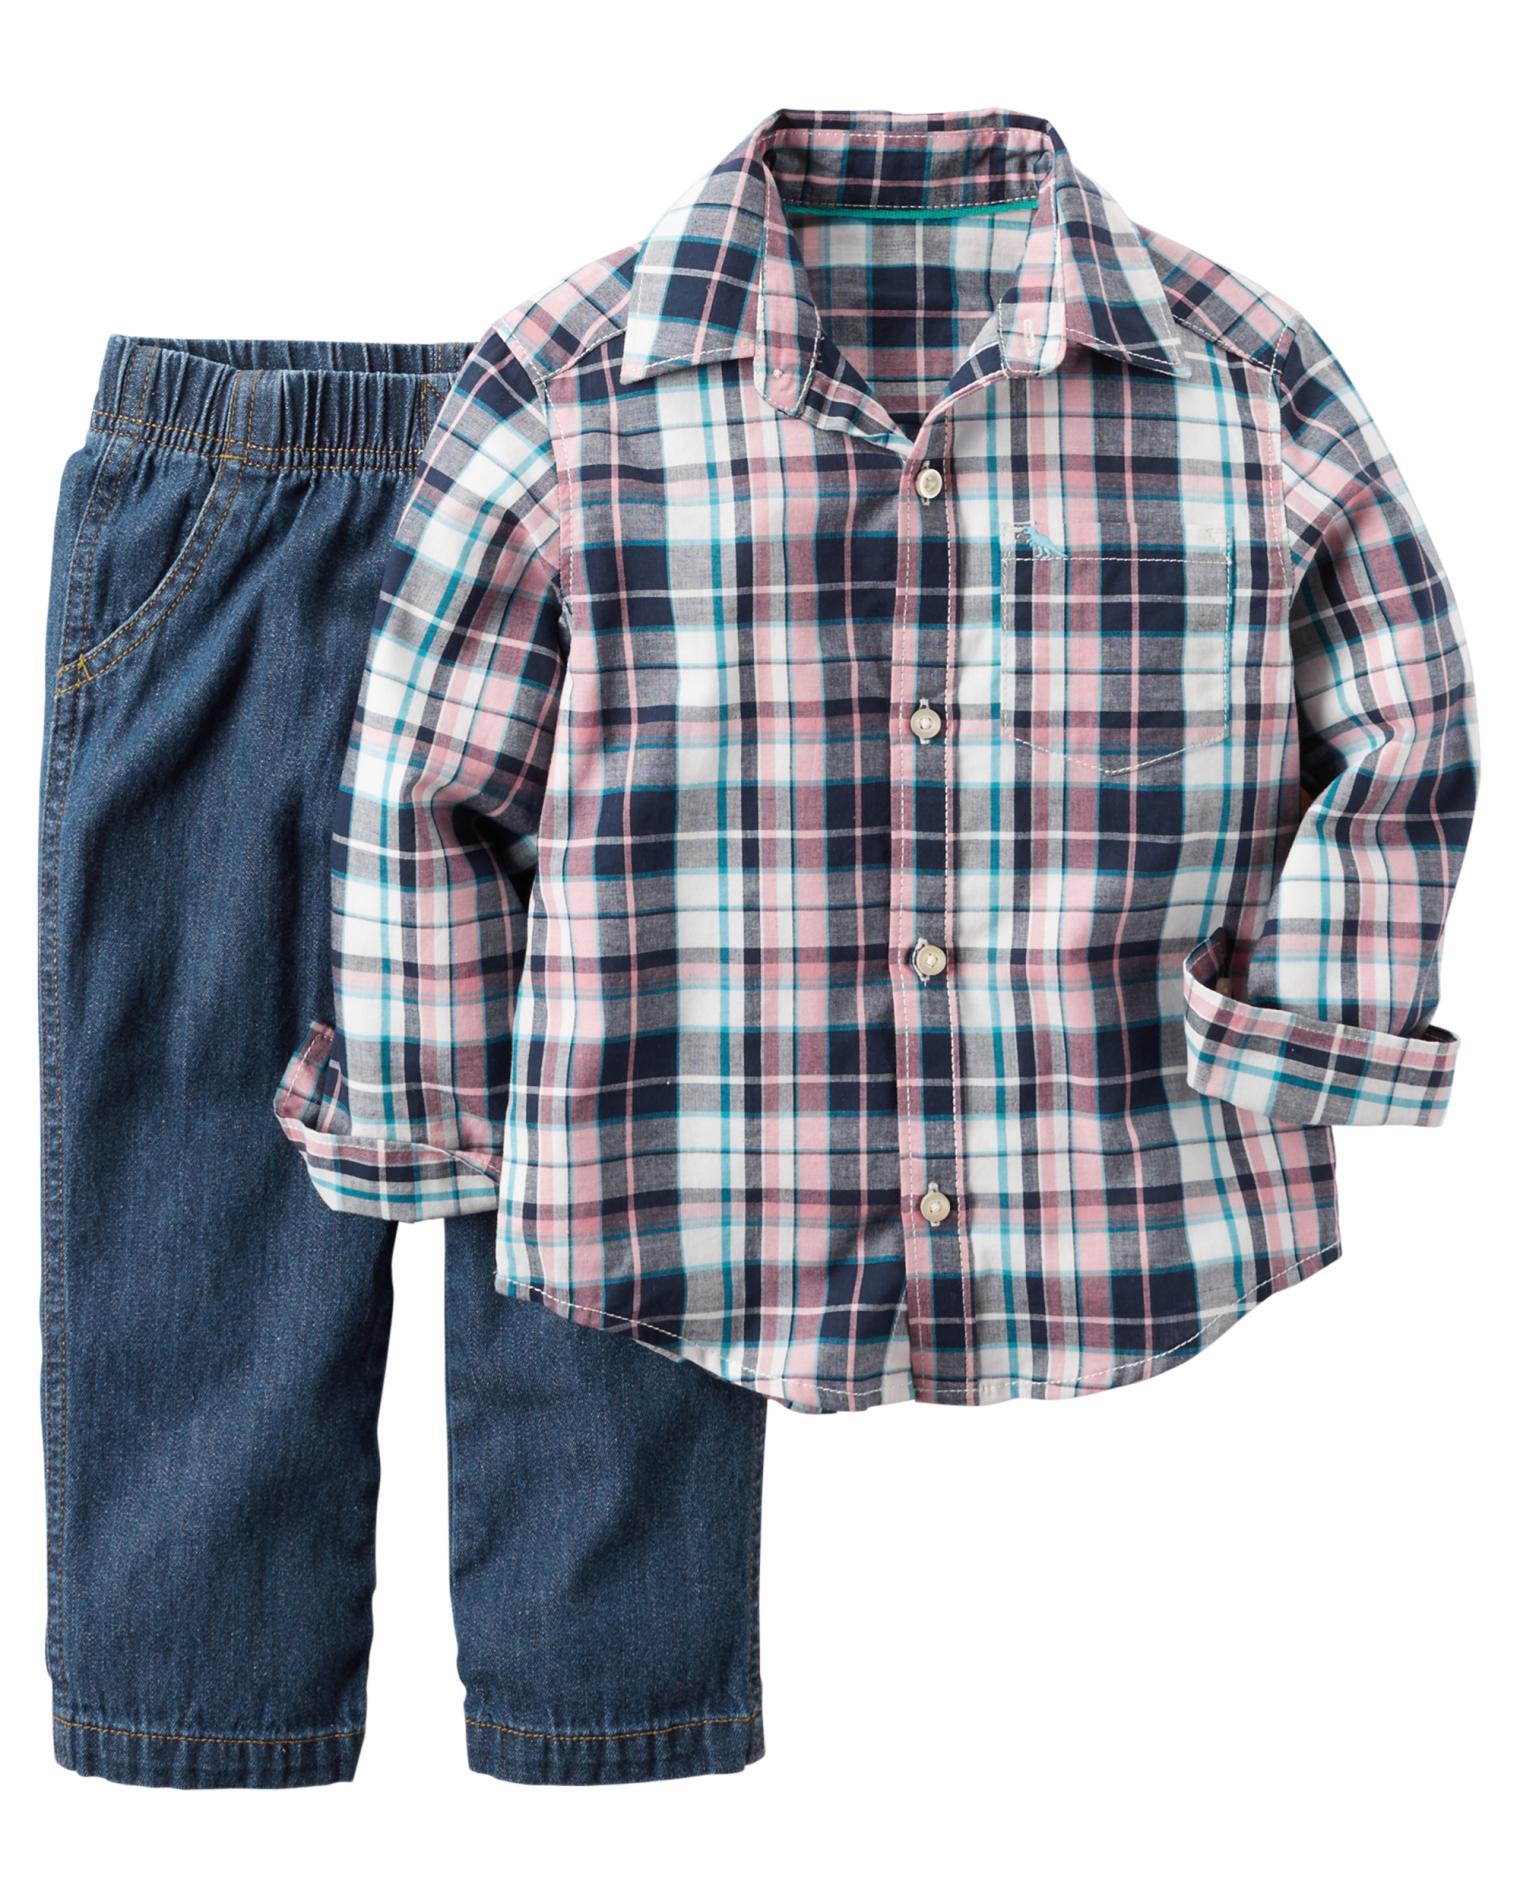 Carter's Toddler Boys' Button-Front Shirt & Jeans - Plaid